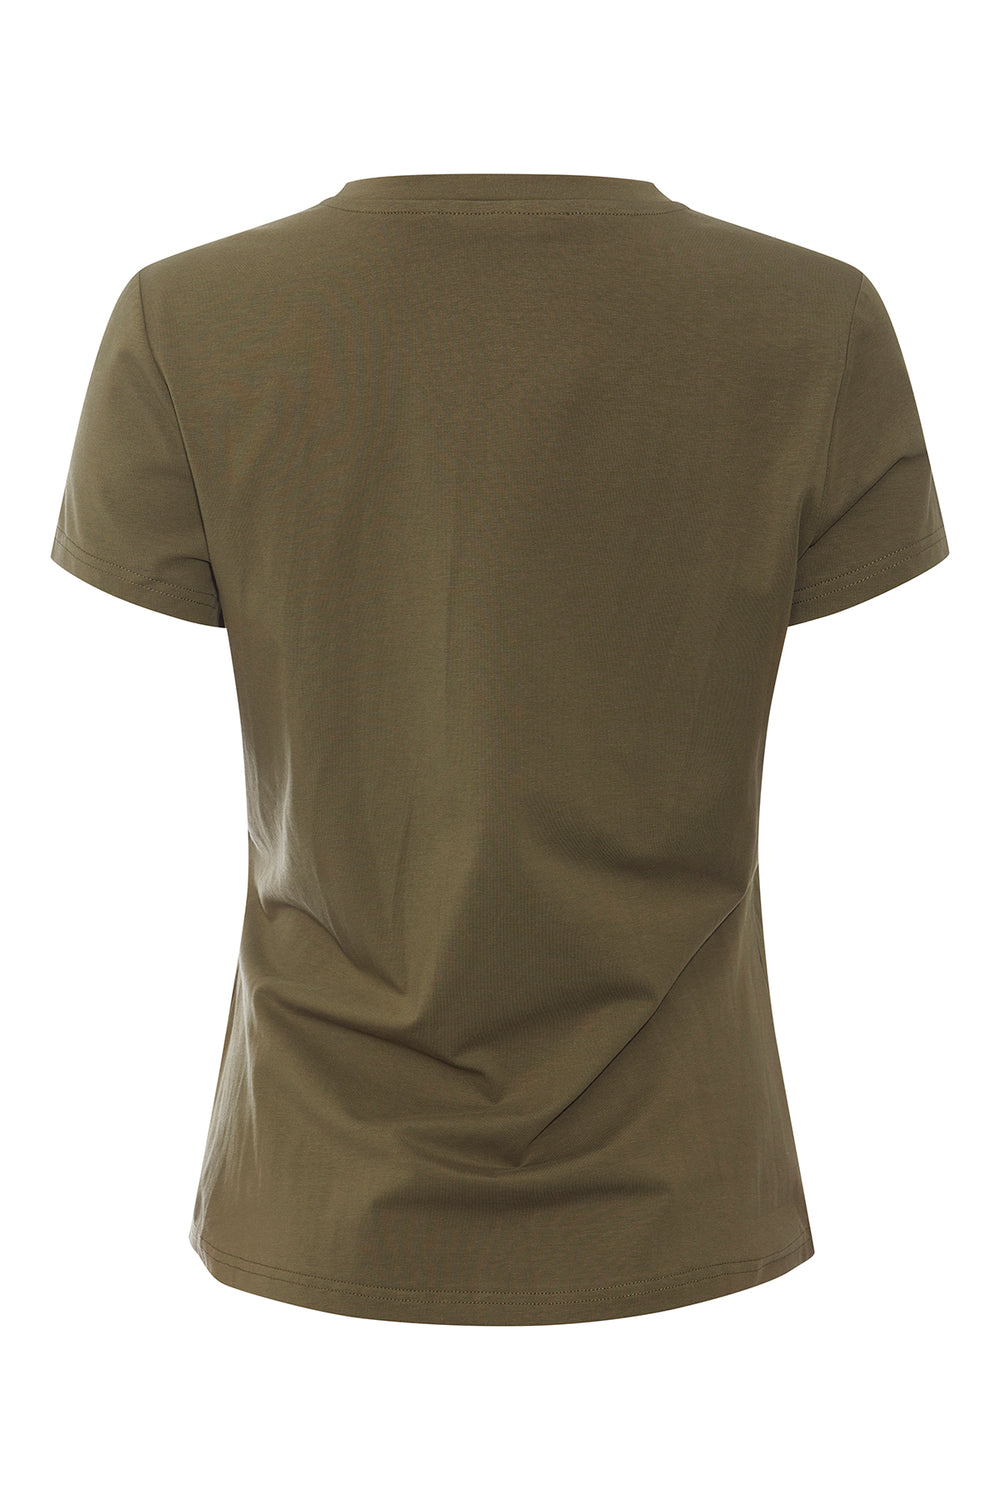 PBO Domos T-shirt T-SHIRTS 516 Burnt olive